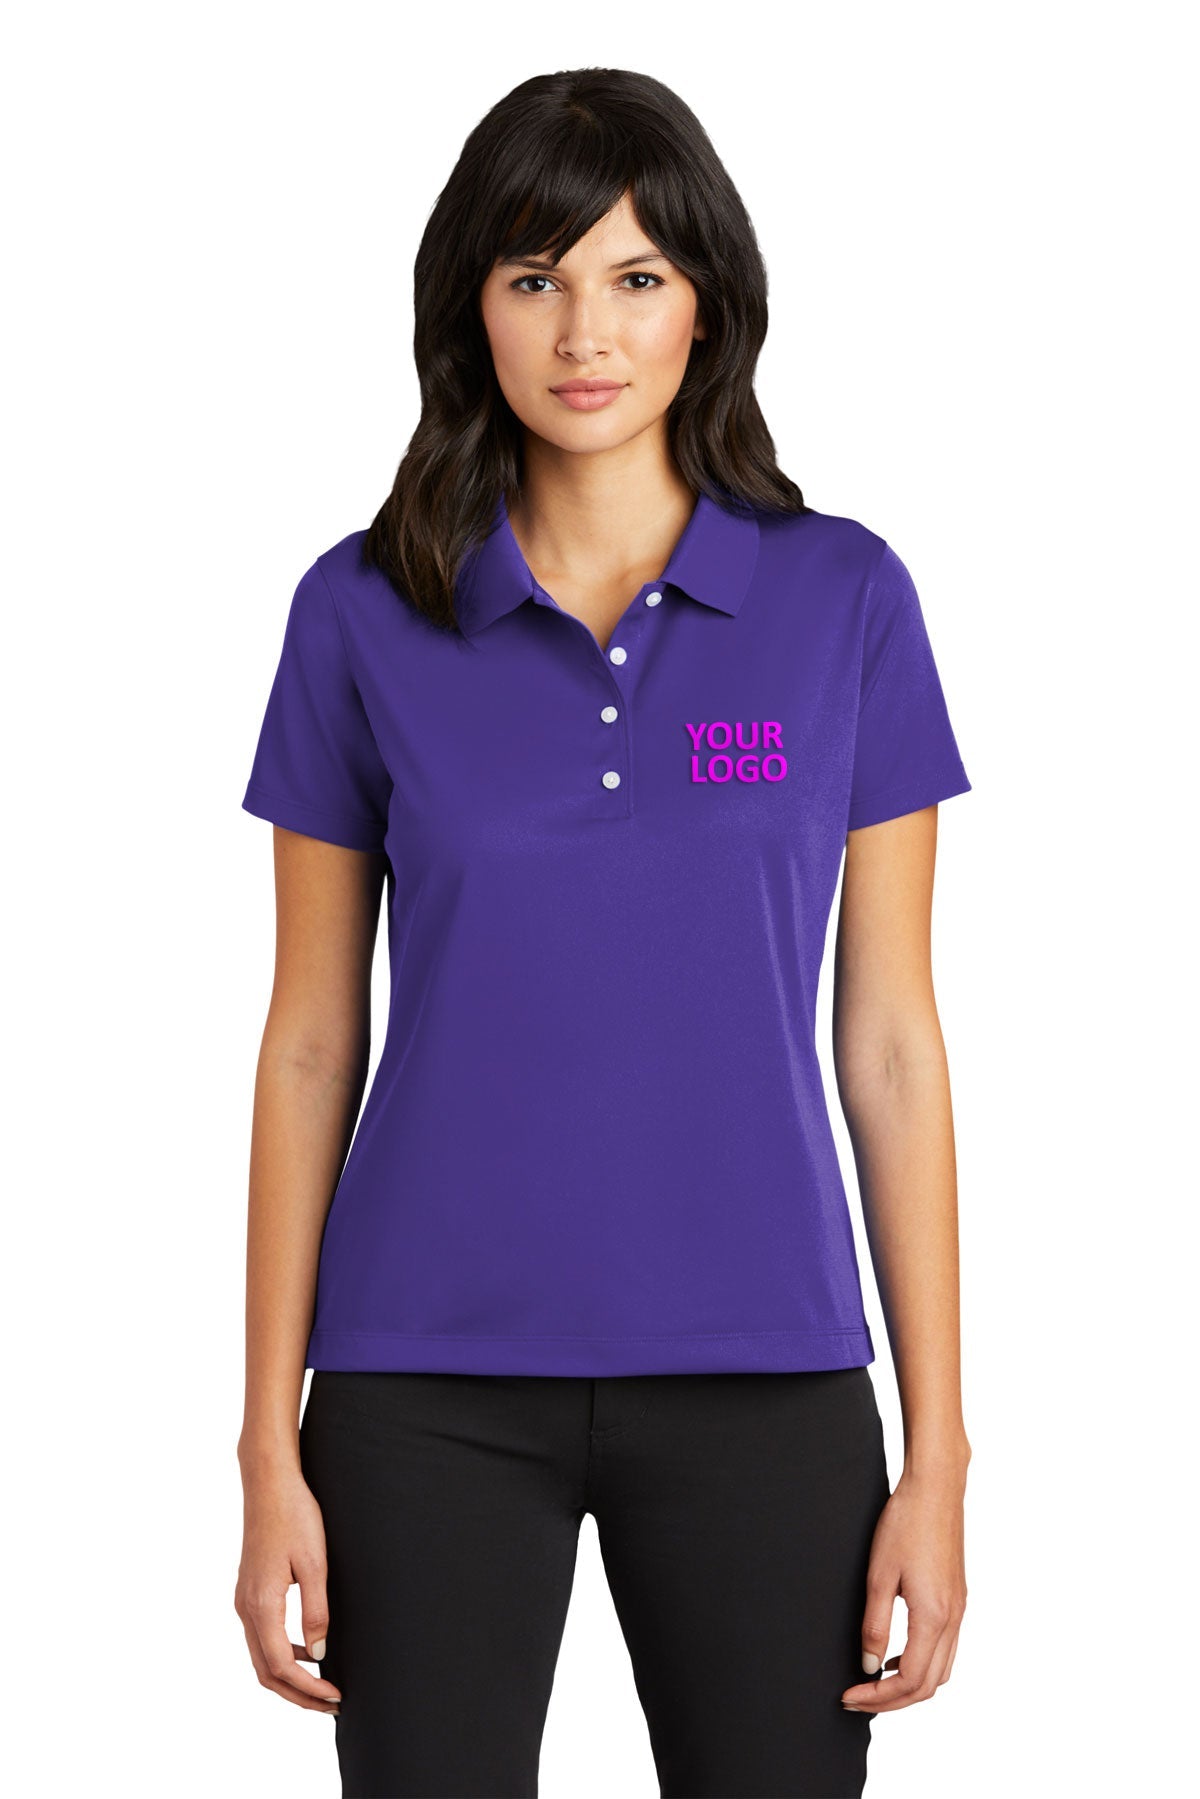 nike varsity purple 203697 embroidered polo shirts custom